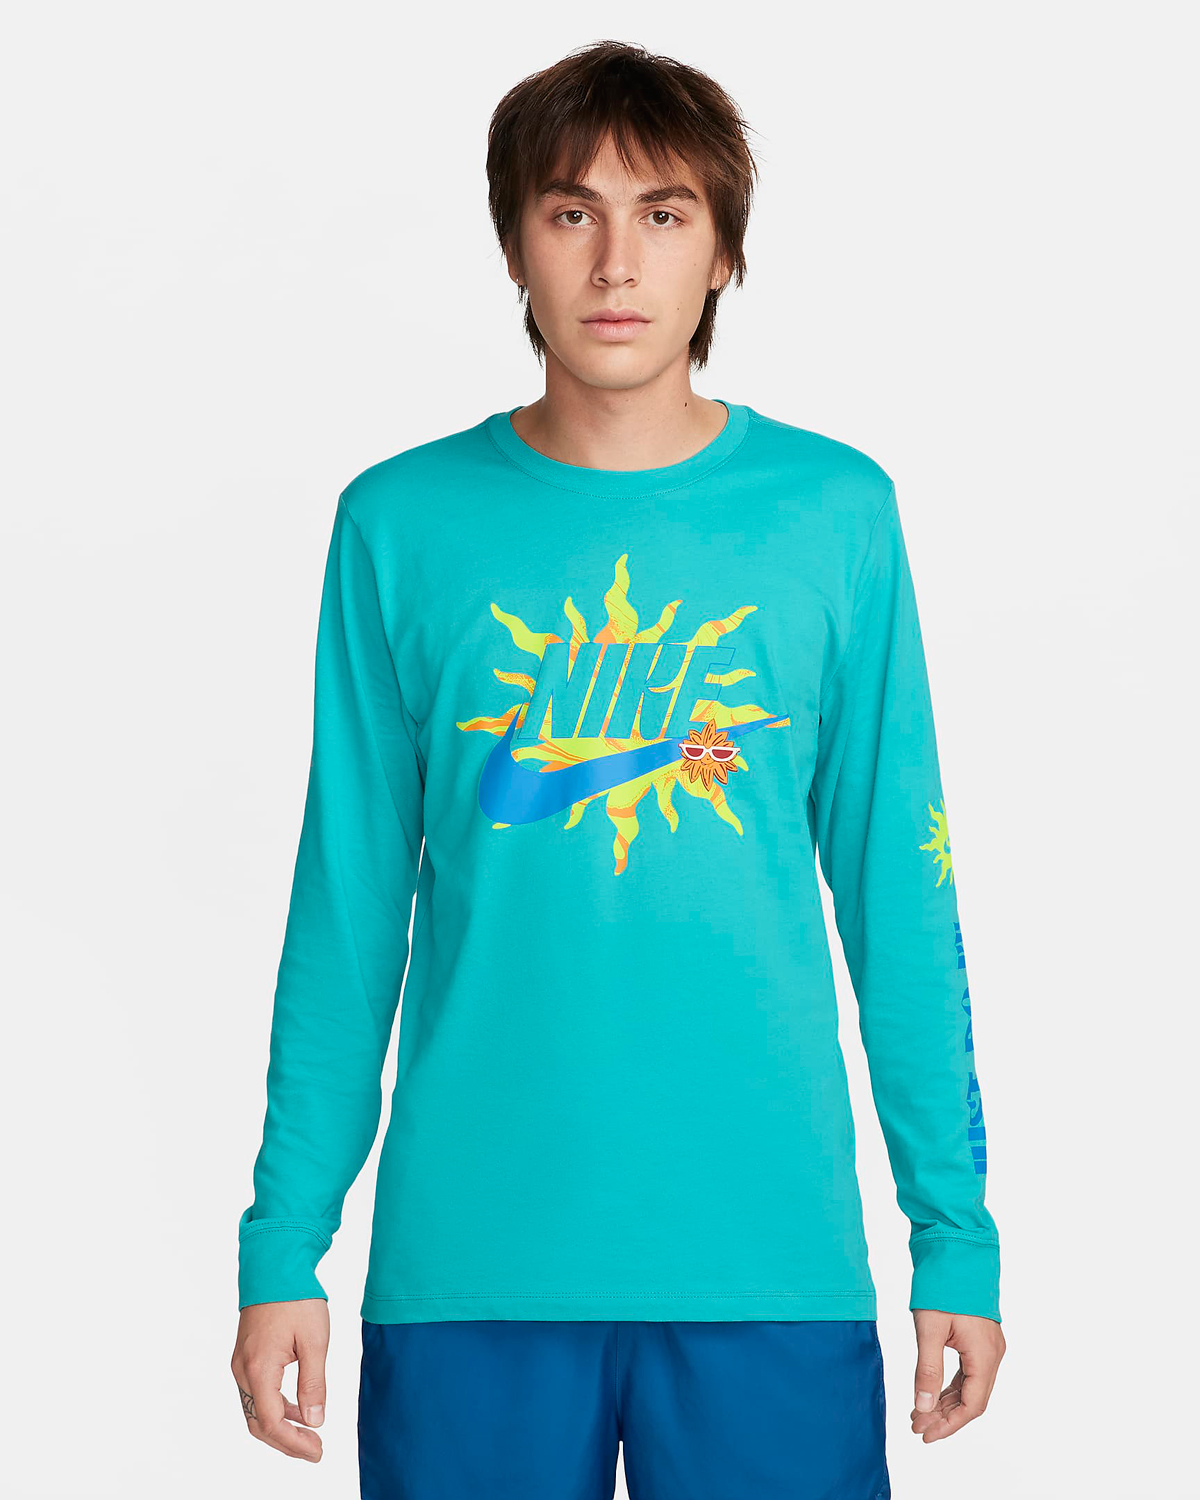 Nike-Sportswear-Long-Sleeve-T-Shirt-Dusty-Cactus-1